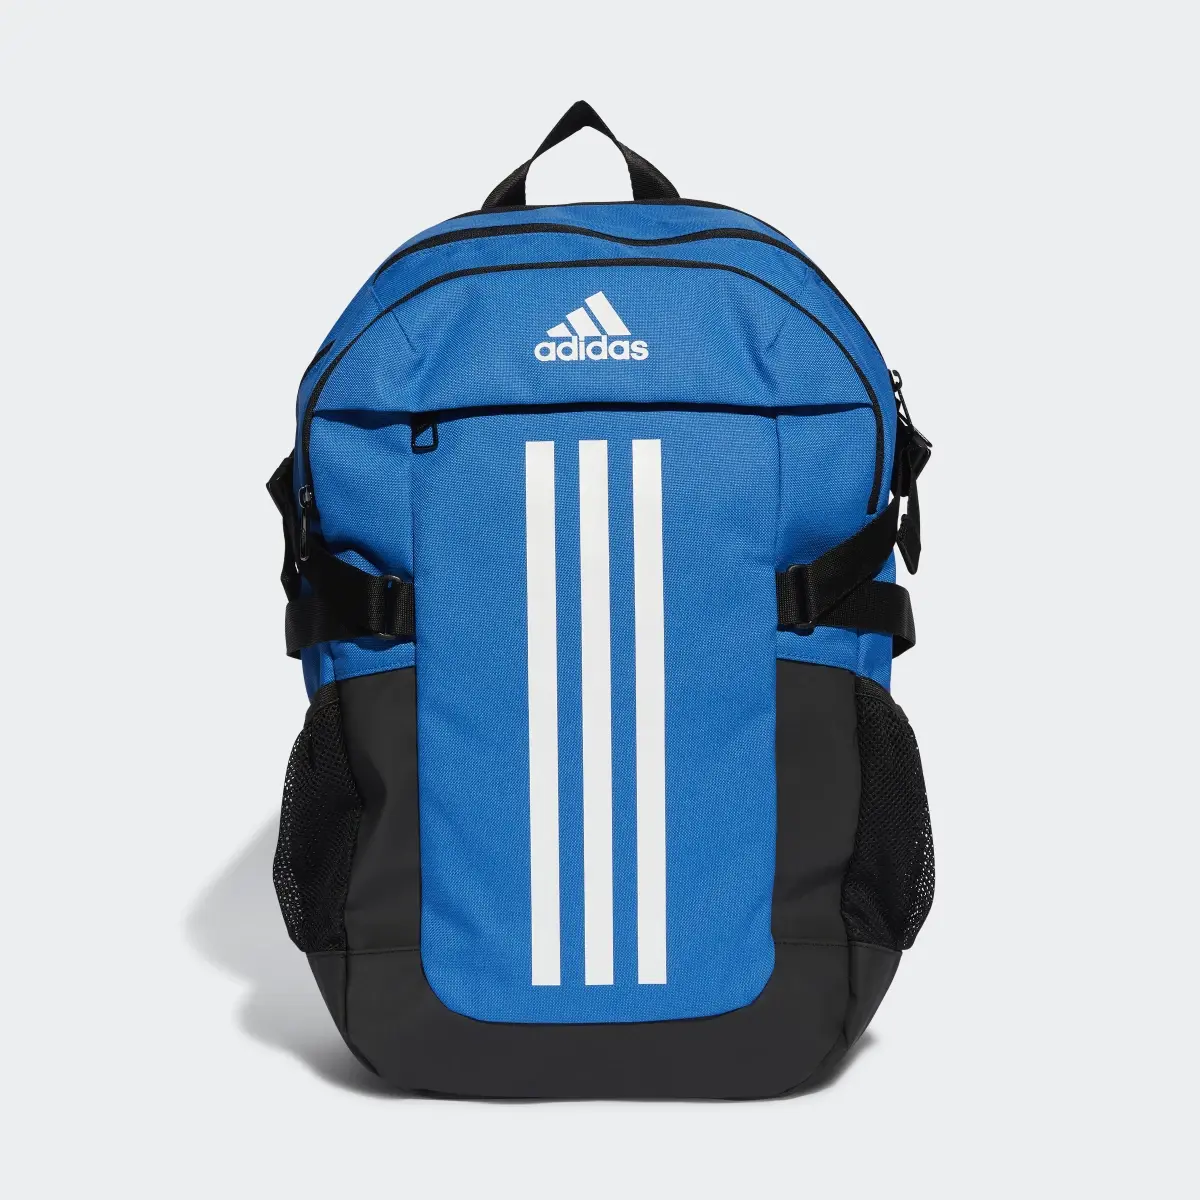 Adidas Power VI Backpack. 2